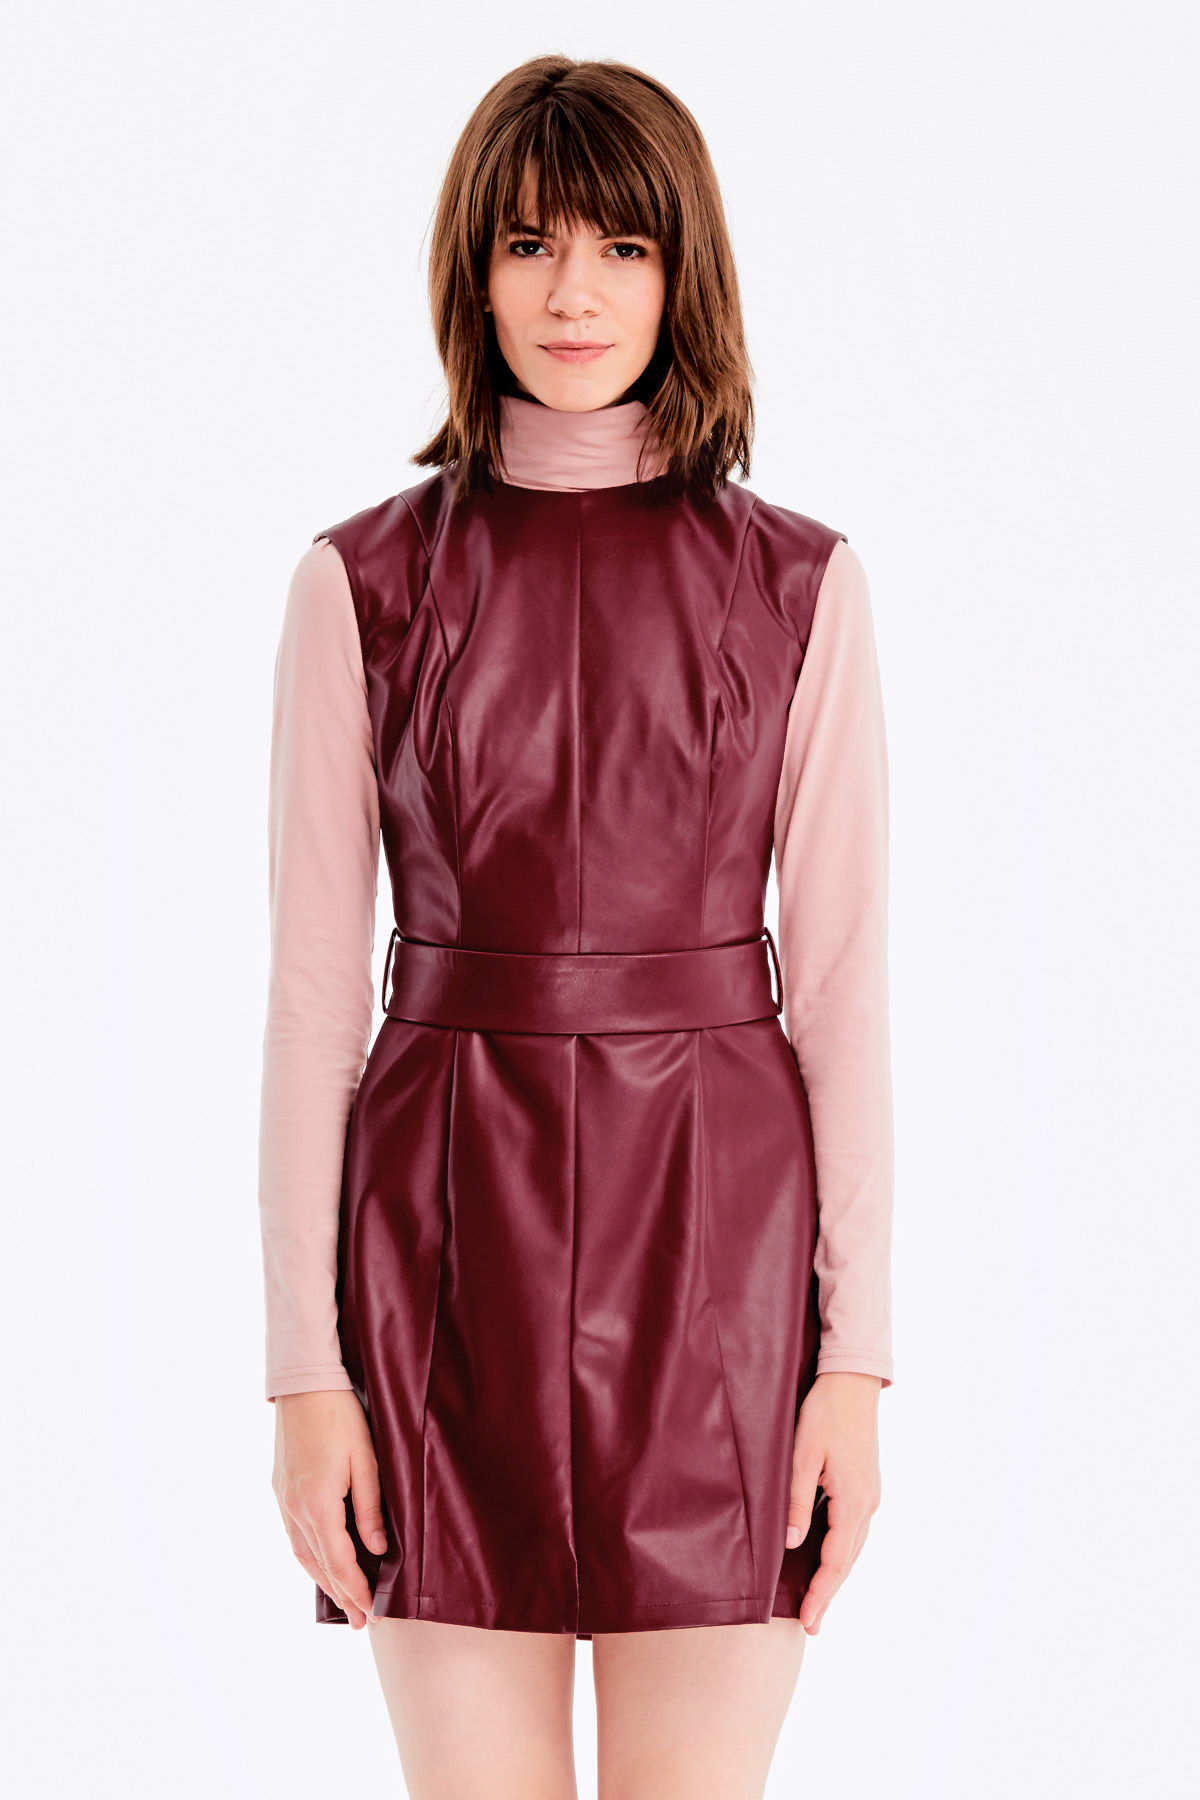 Below-knee burgundy leather dress , photo 9